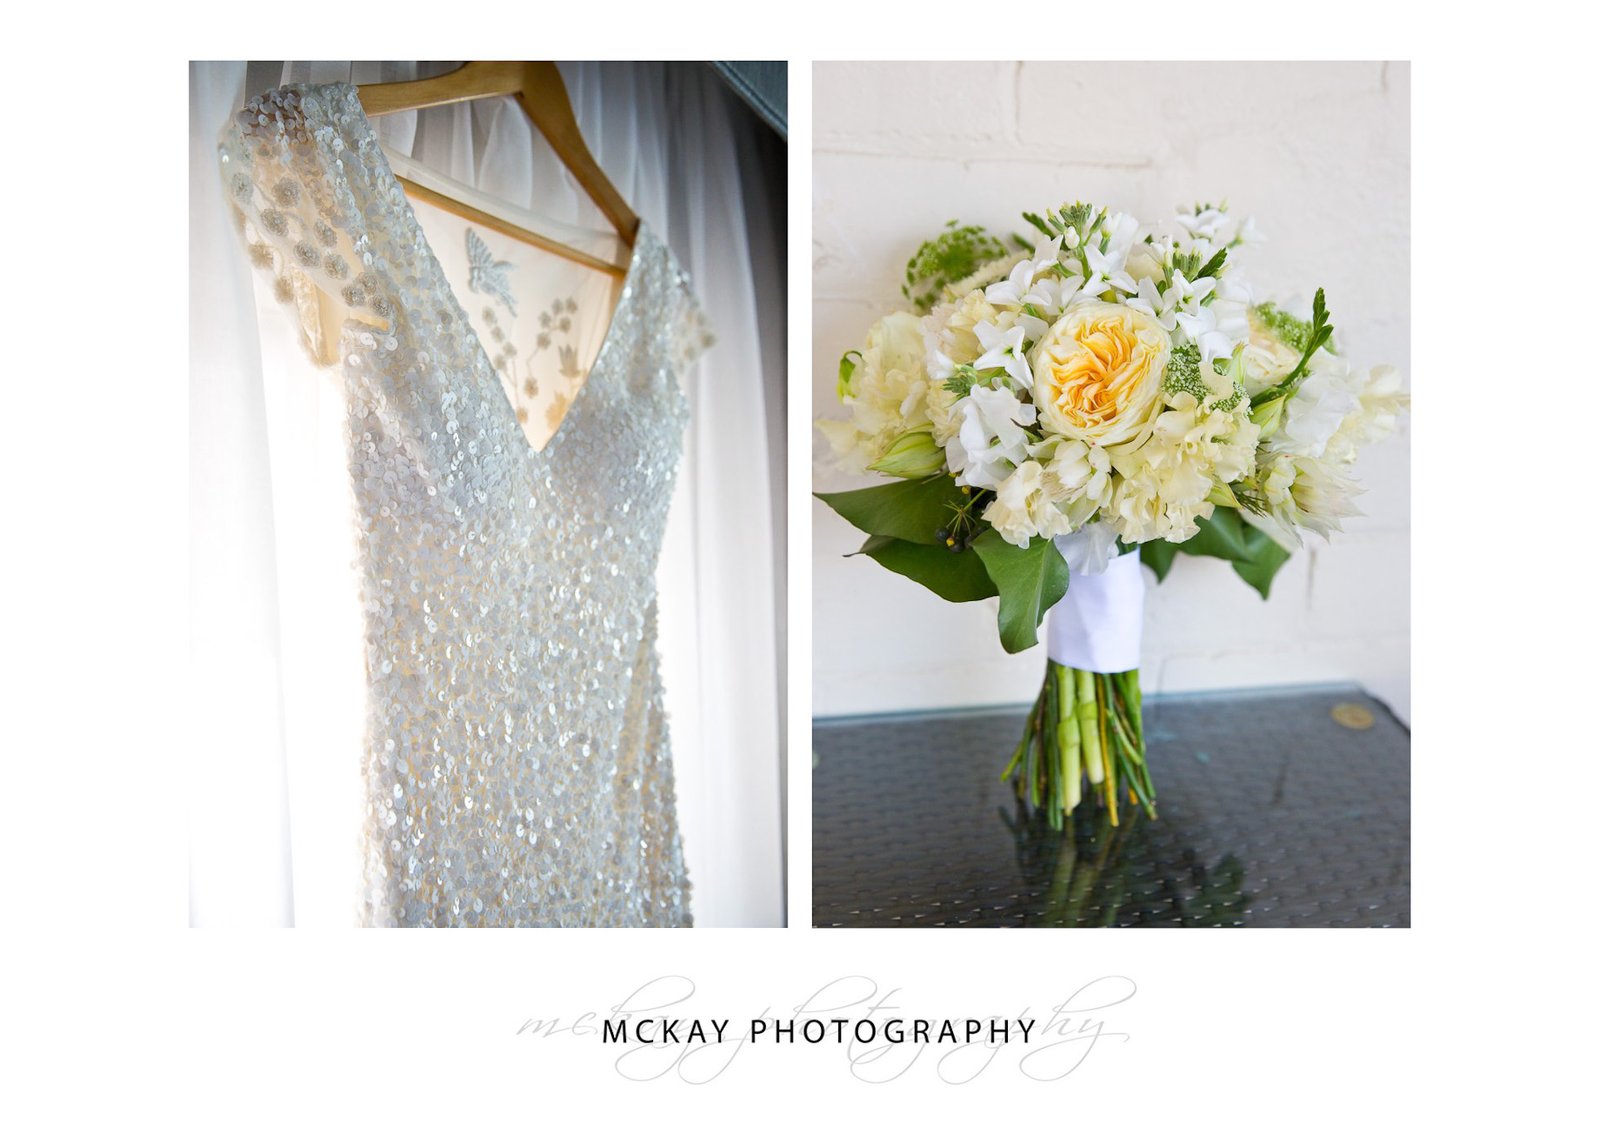 Wedding detail photos dress and flowers bouquet